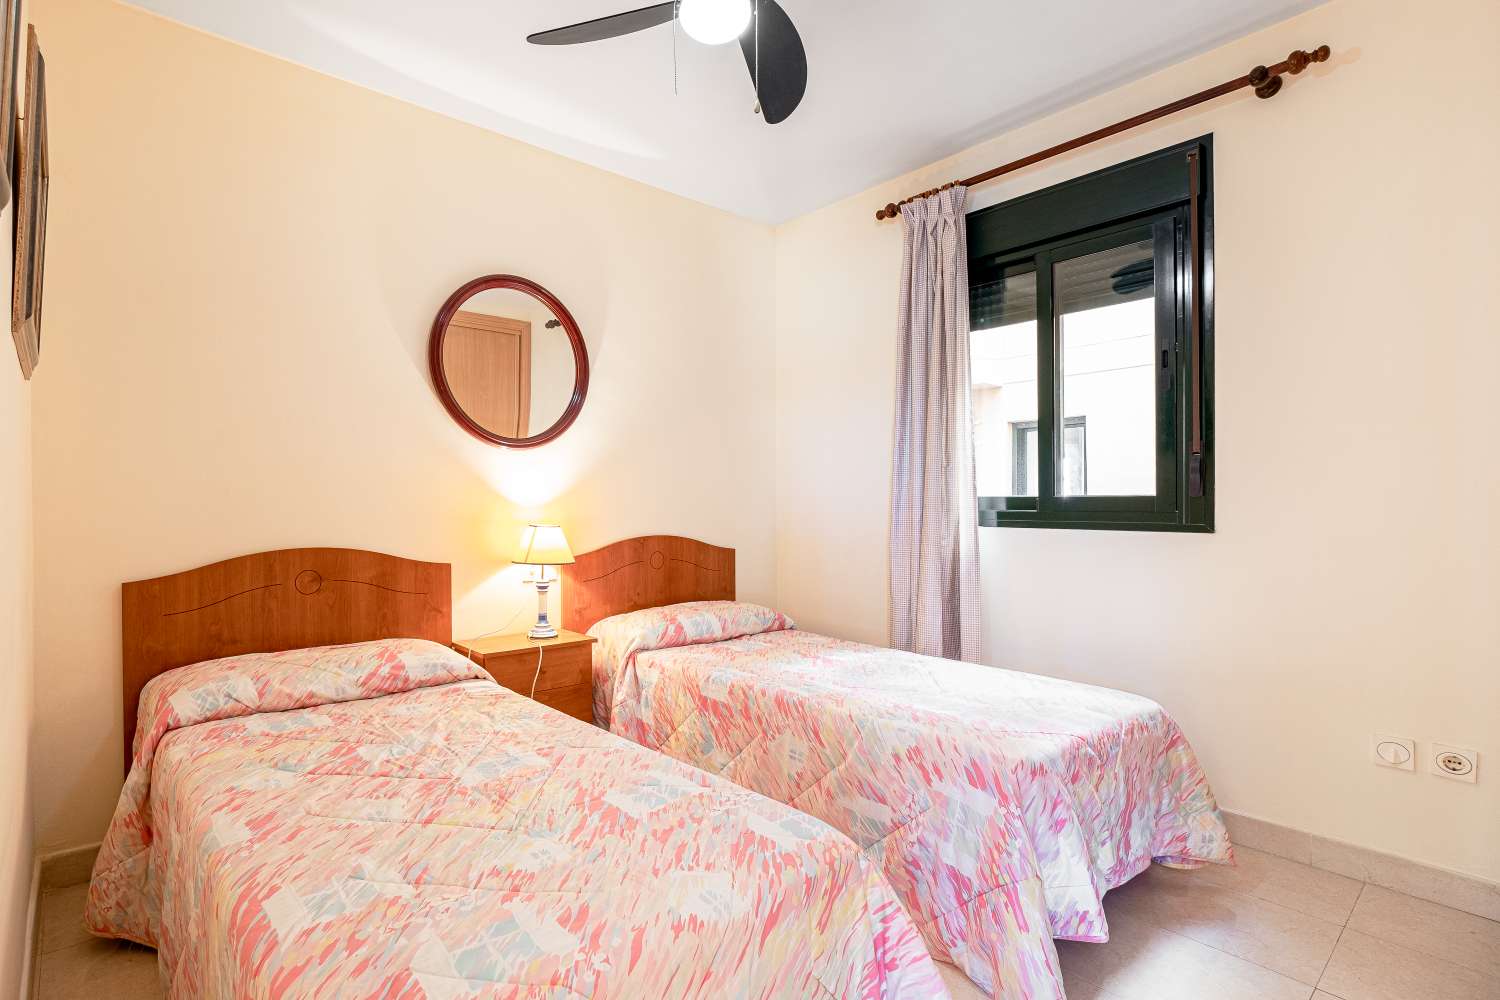 2 bedroom apartment in Chaparil area - Nerja